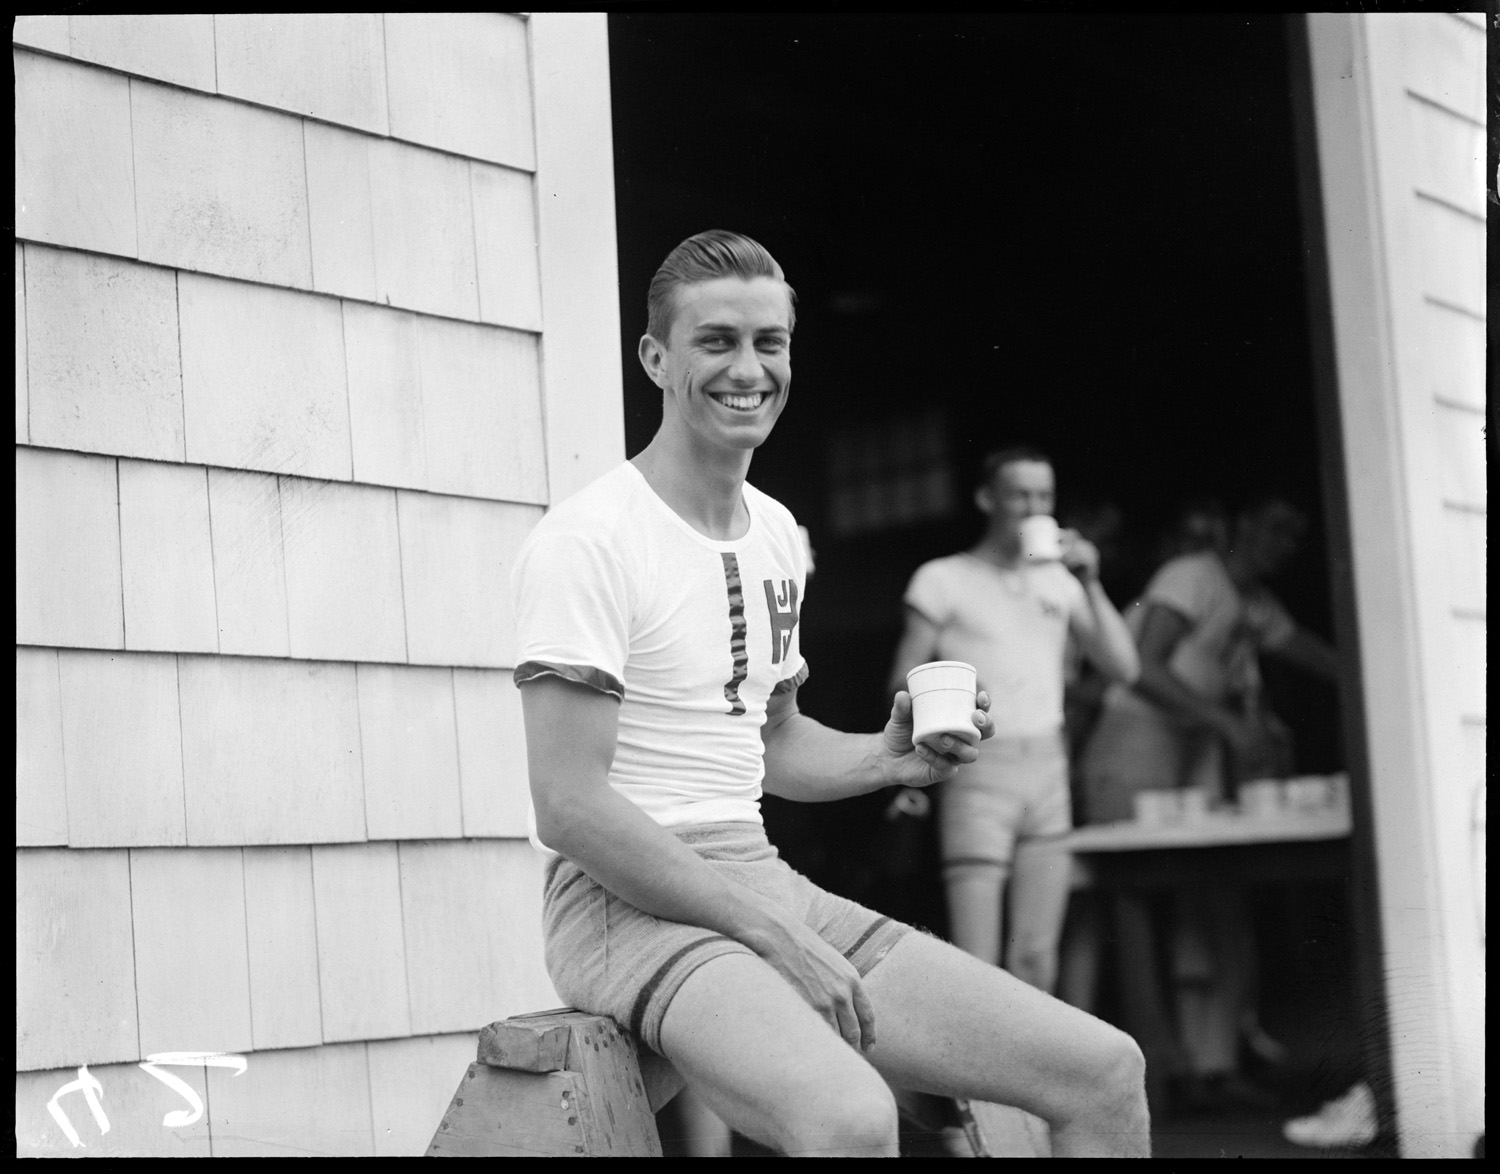 Franklin D. Roosevelt Jr. taking a break after rowing with Harvard crew